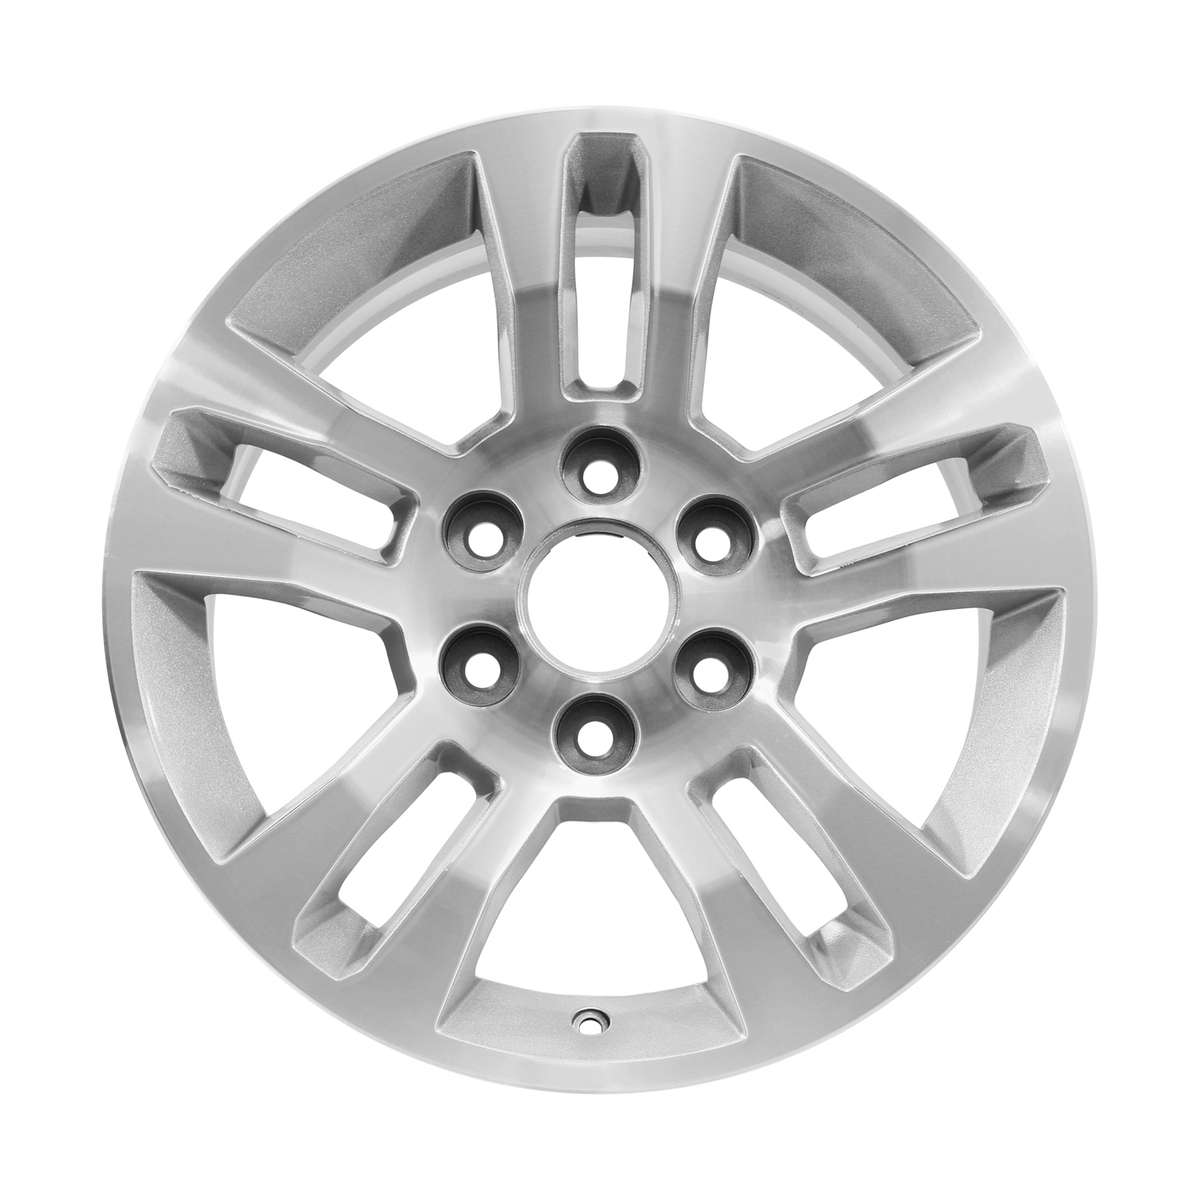 2015 Chevrolet Silverado 1500 New 18" Replacement Wheel Rim RW5646MS